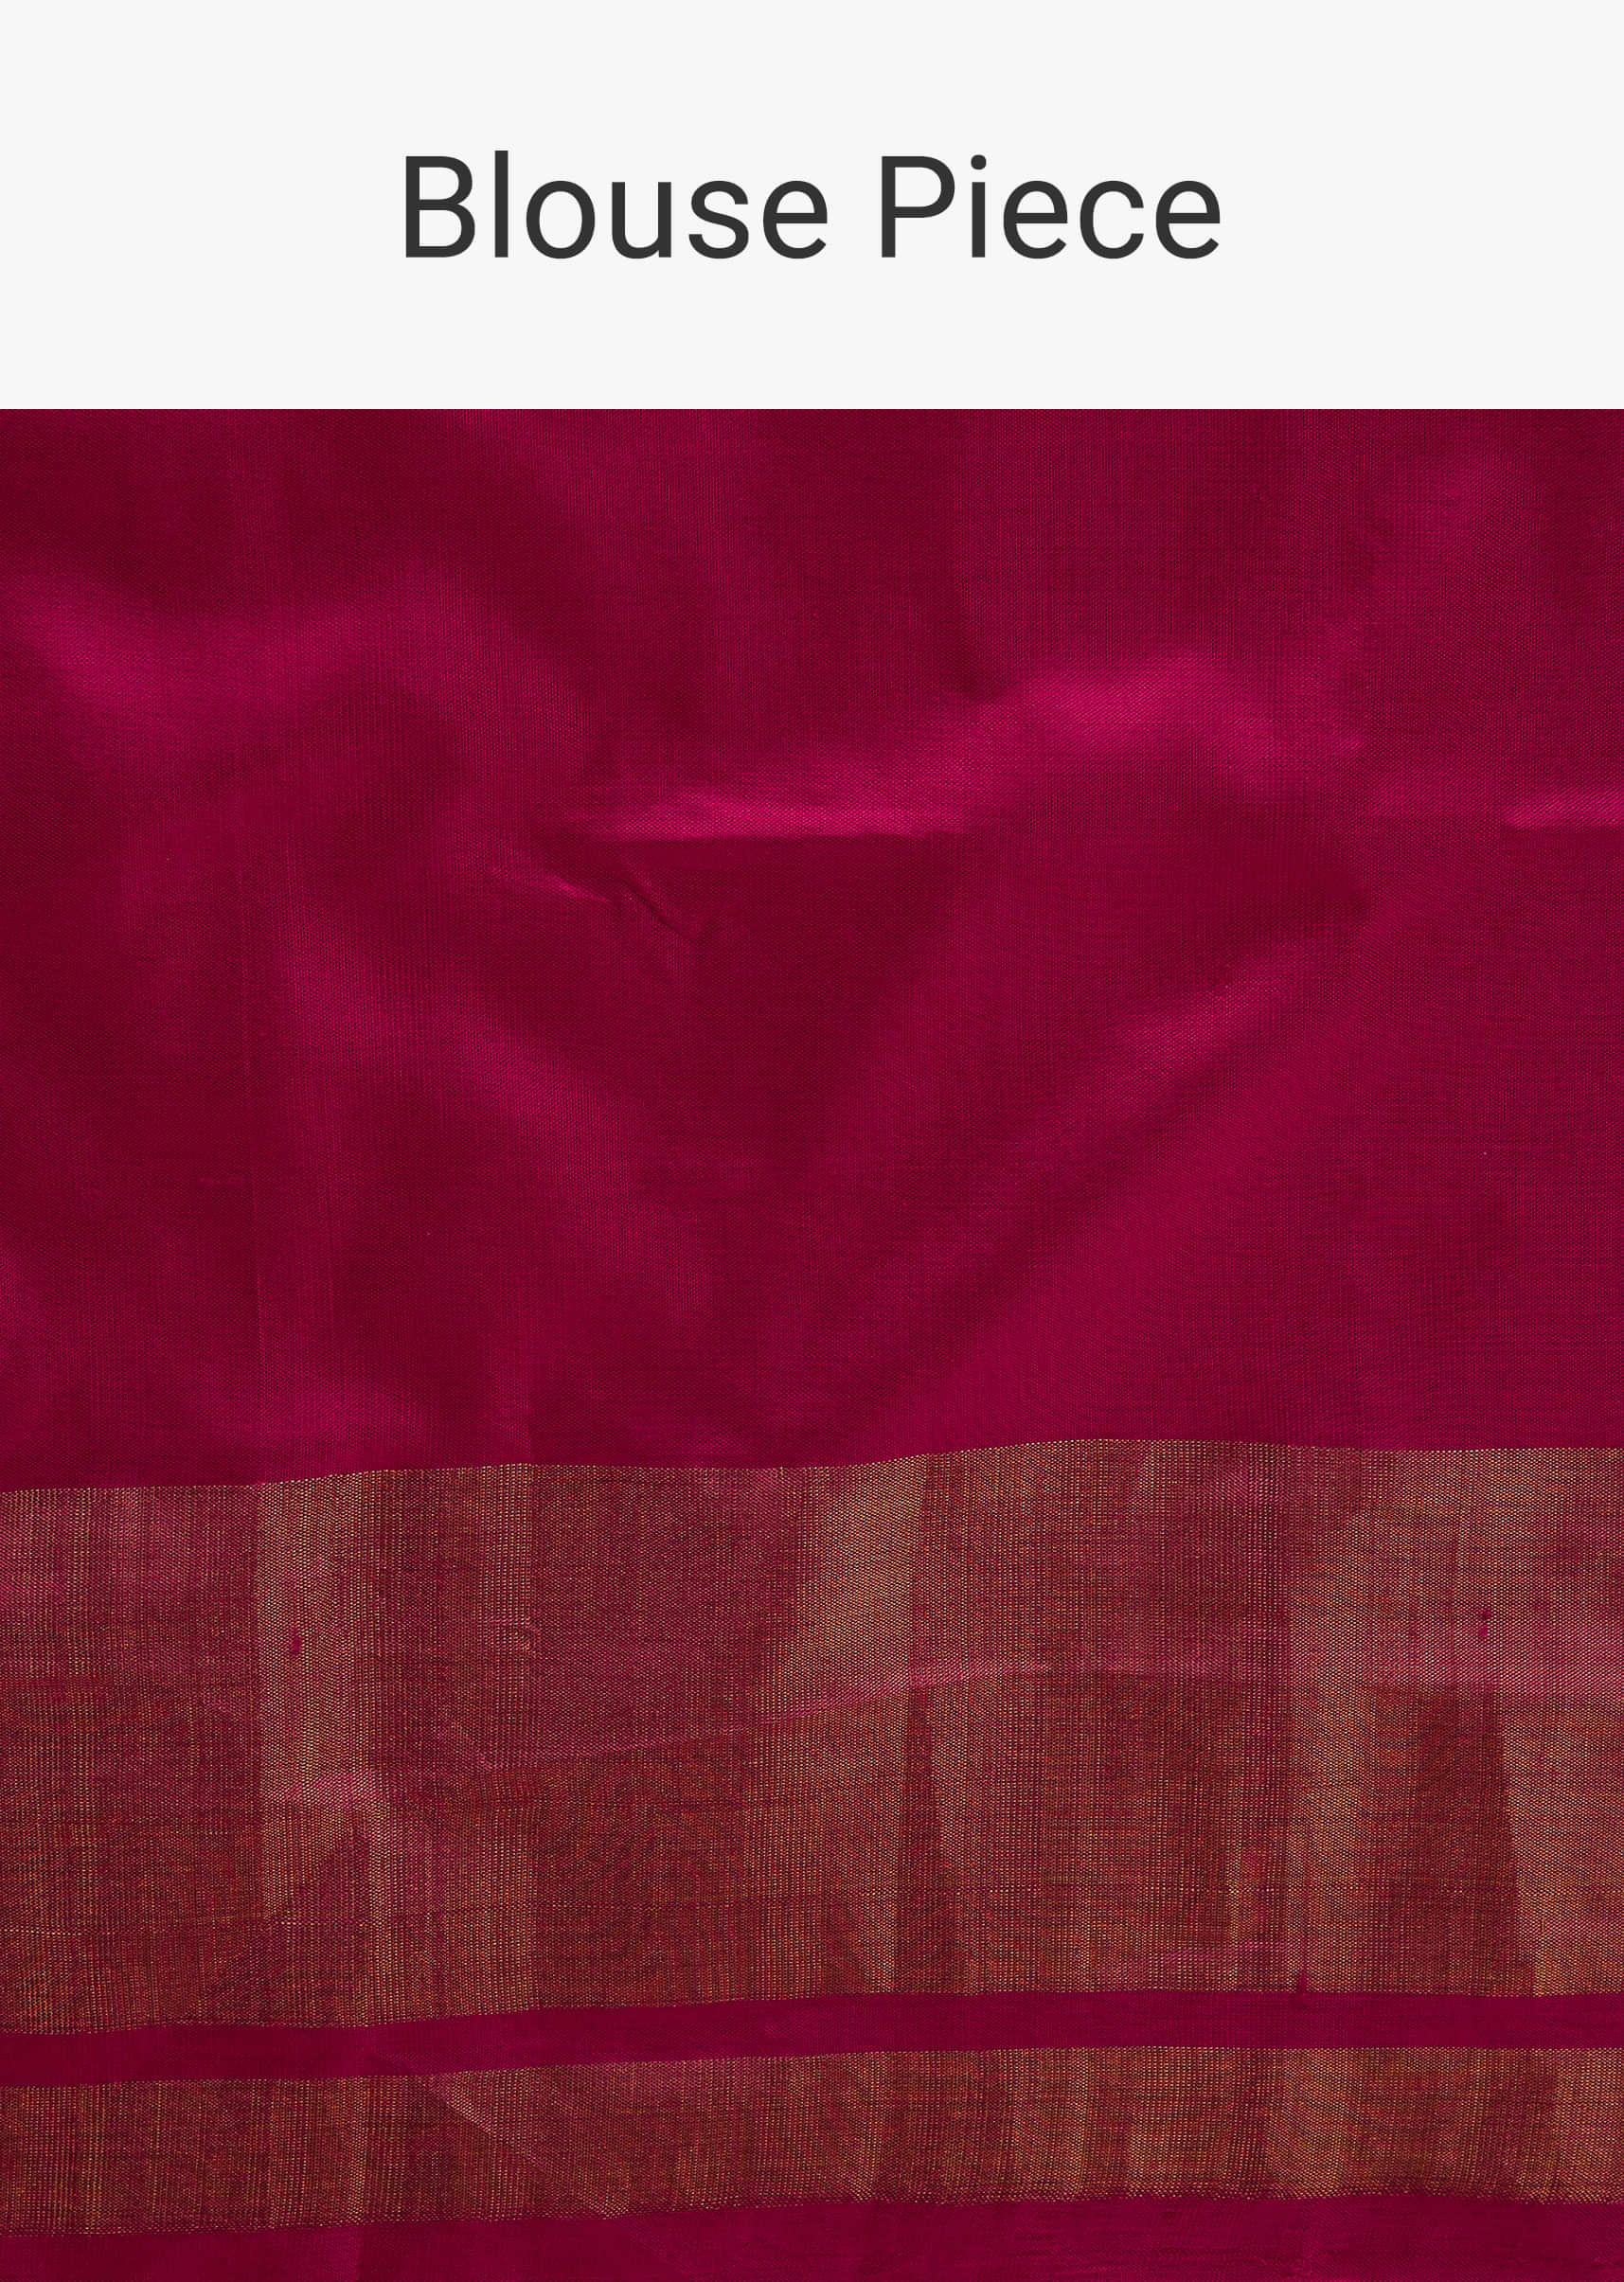 Petal Pink Saree In Silk With Ikat Weave Patola Work